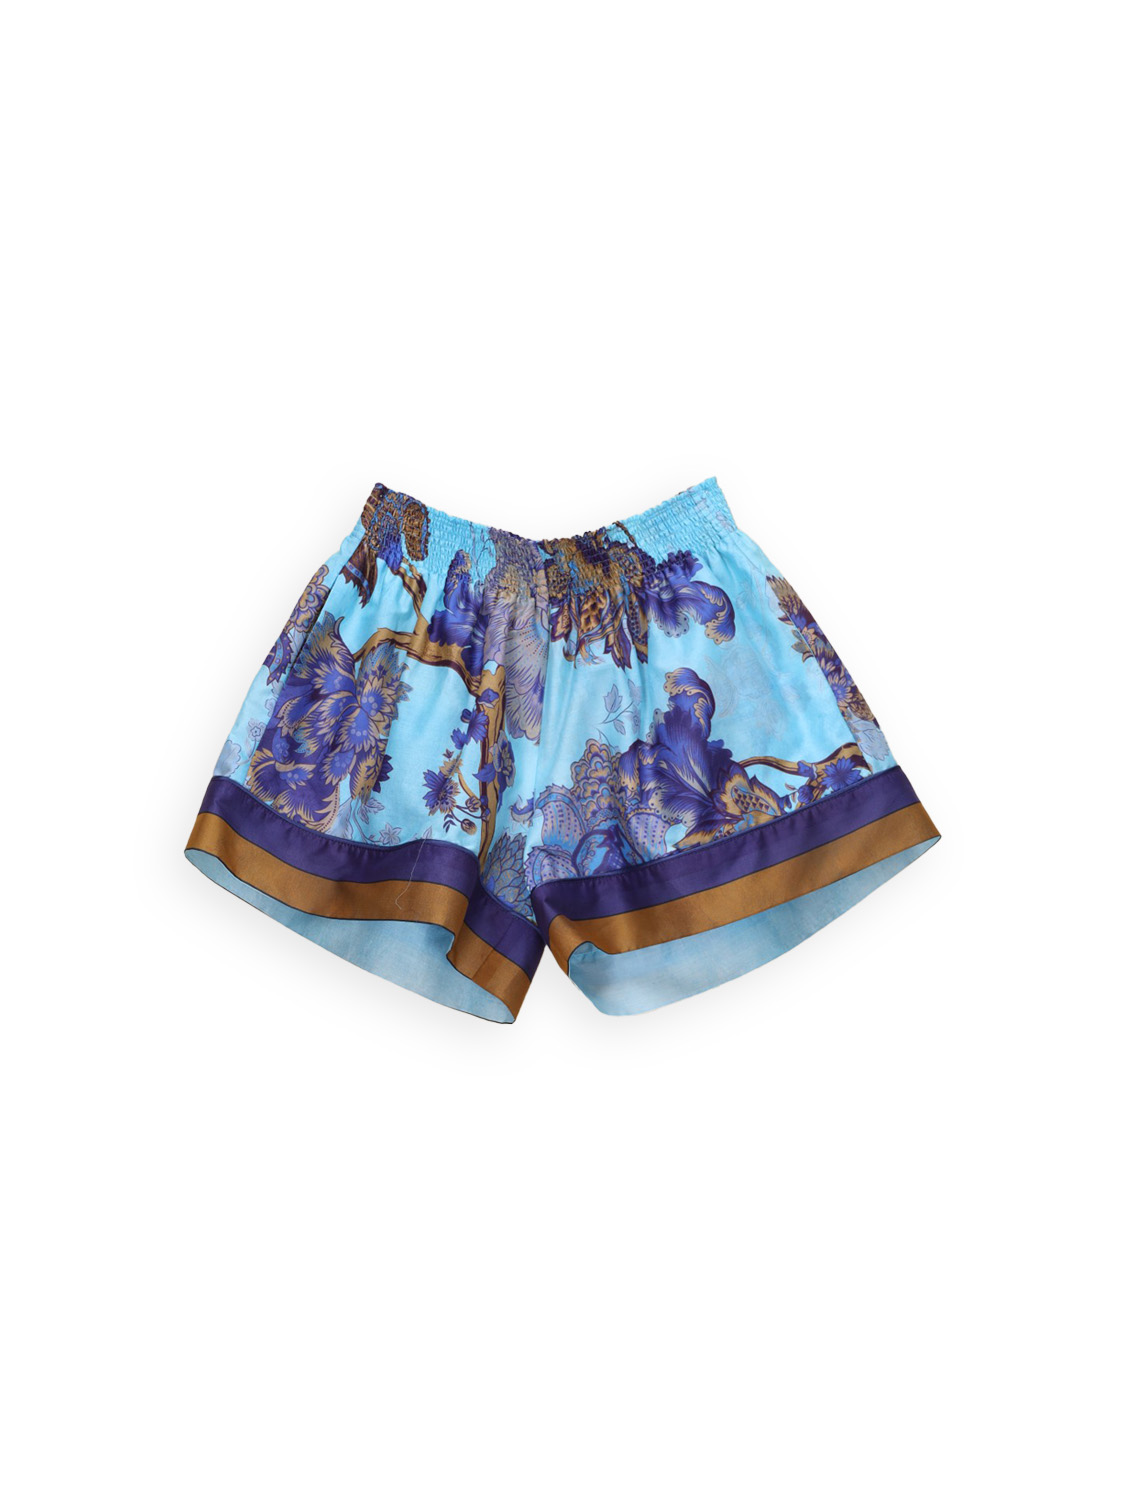 For restless sleepers Baumwoll-Shorts mit Blumen Design    multicolor S